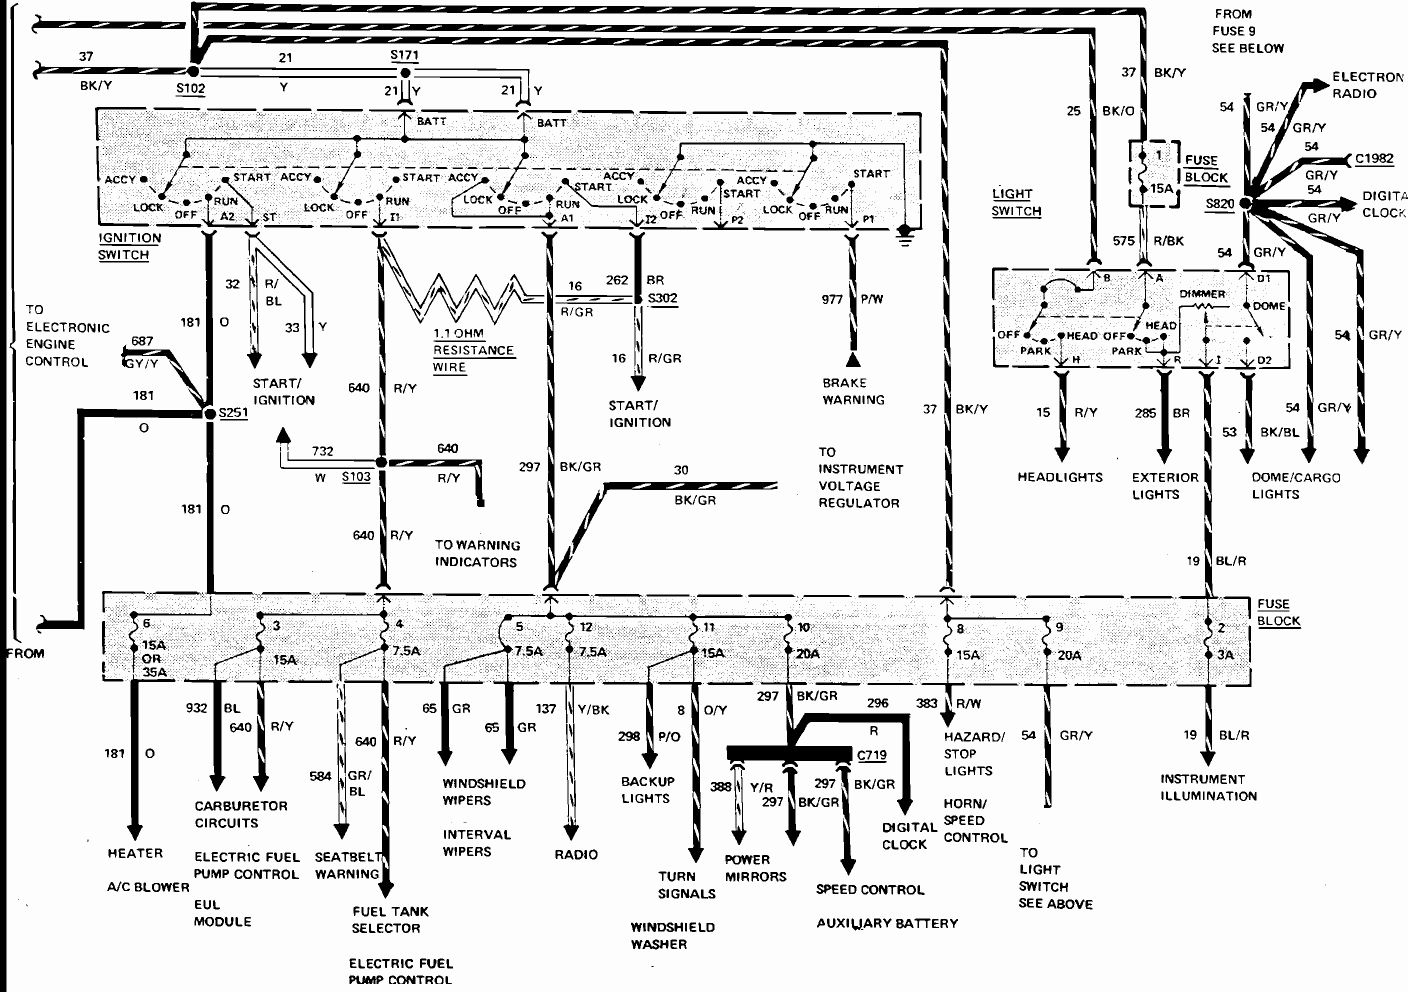 2007 Fleetwood Rv Wiring Diagram - Great Installation Of Wiring - Fleetwood Rv Wiring Diagram